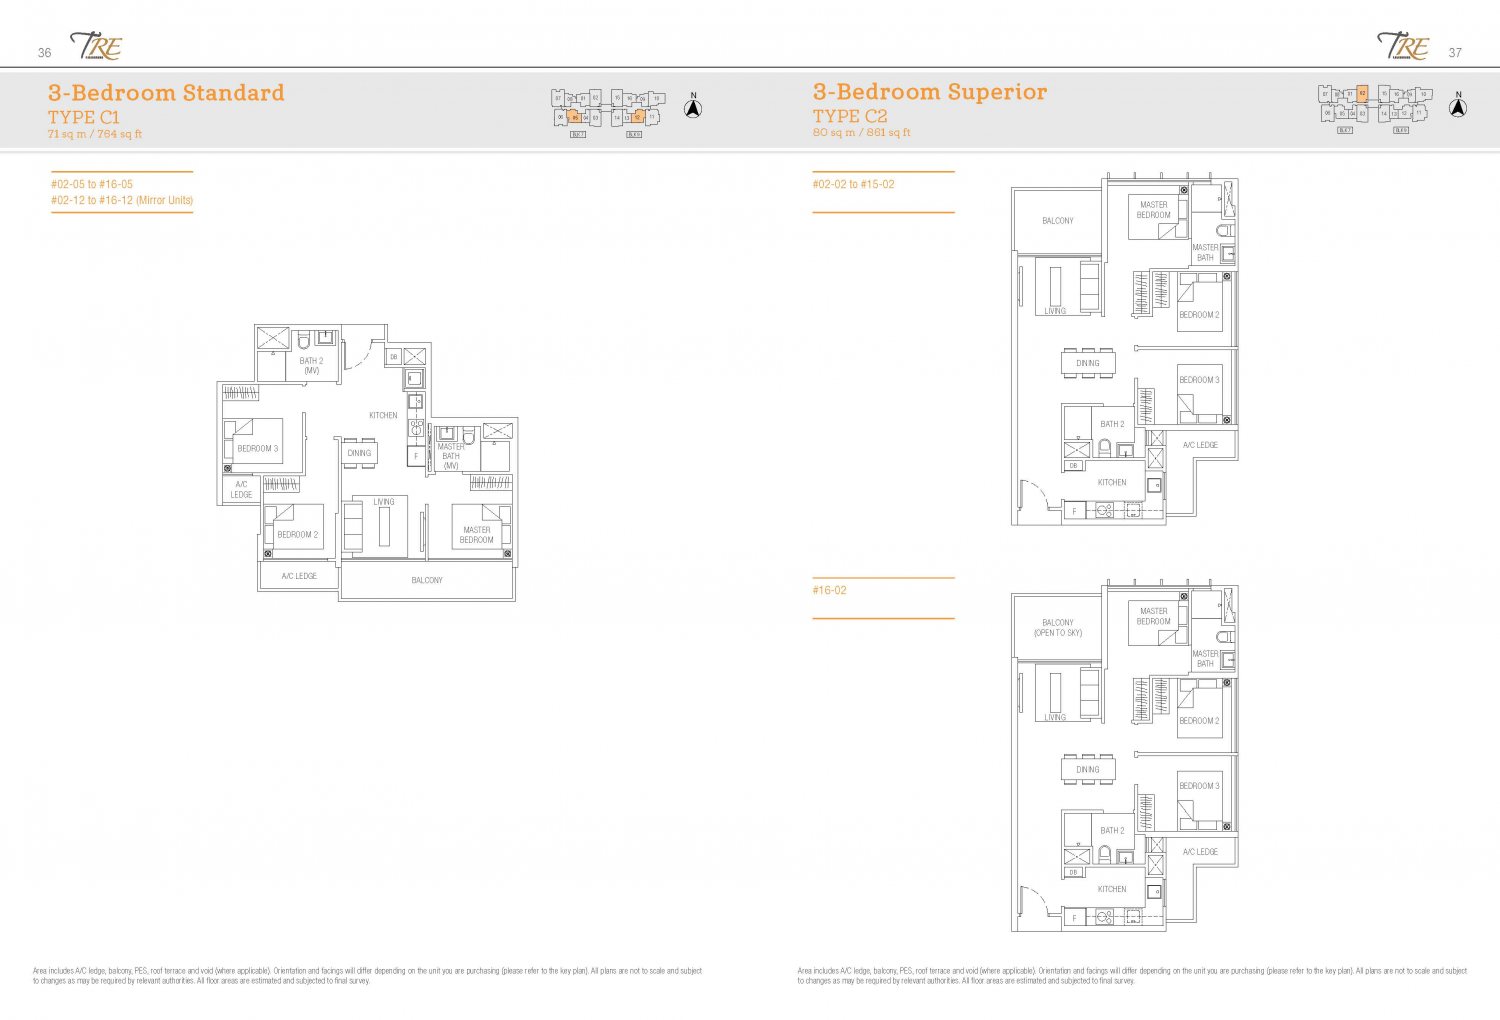 TRE Residences Floorplan